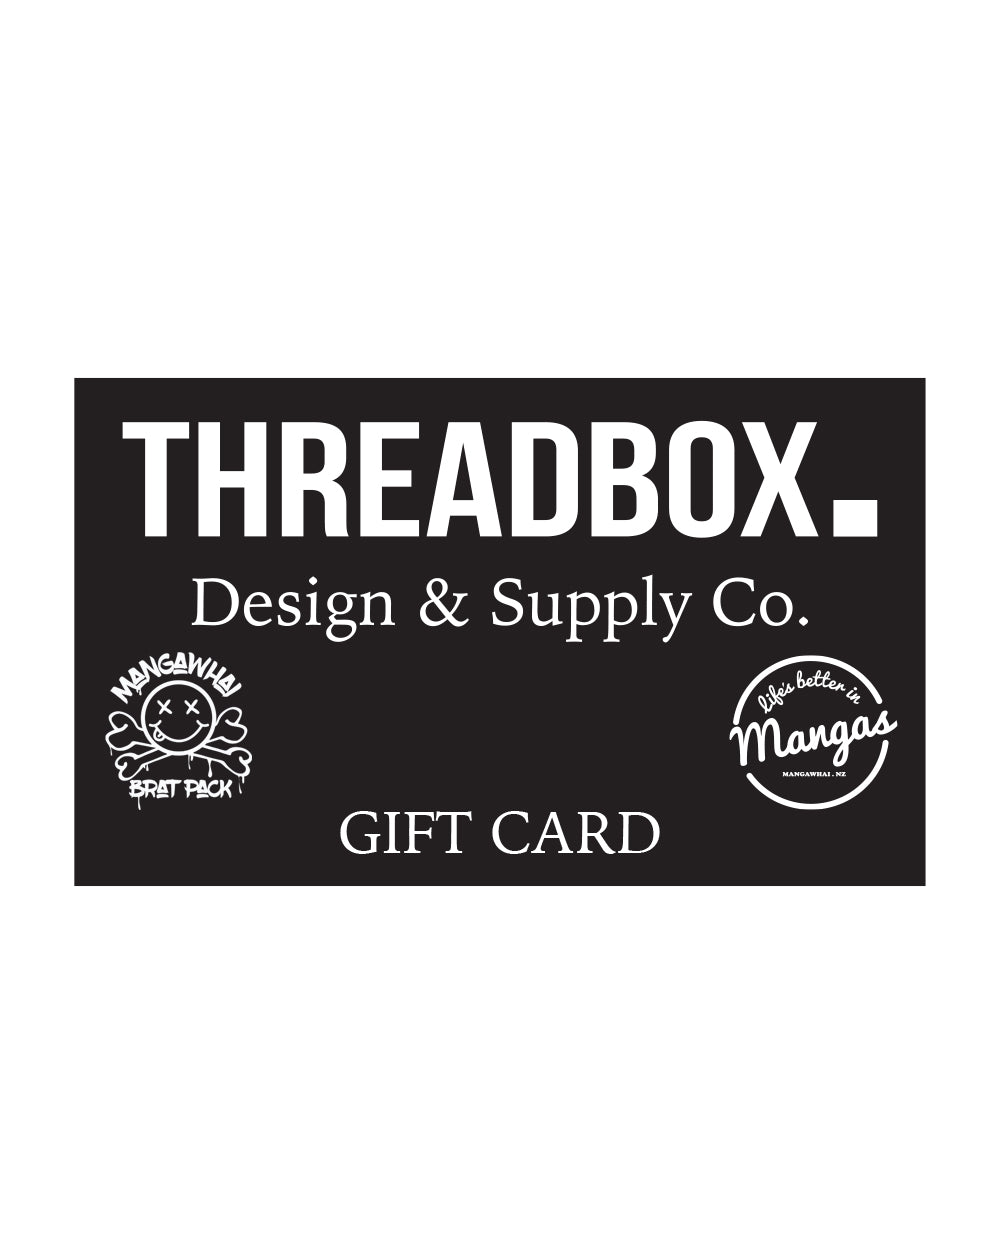 Gift Card - Threadbox